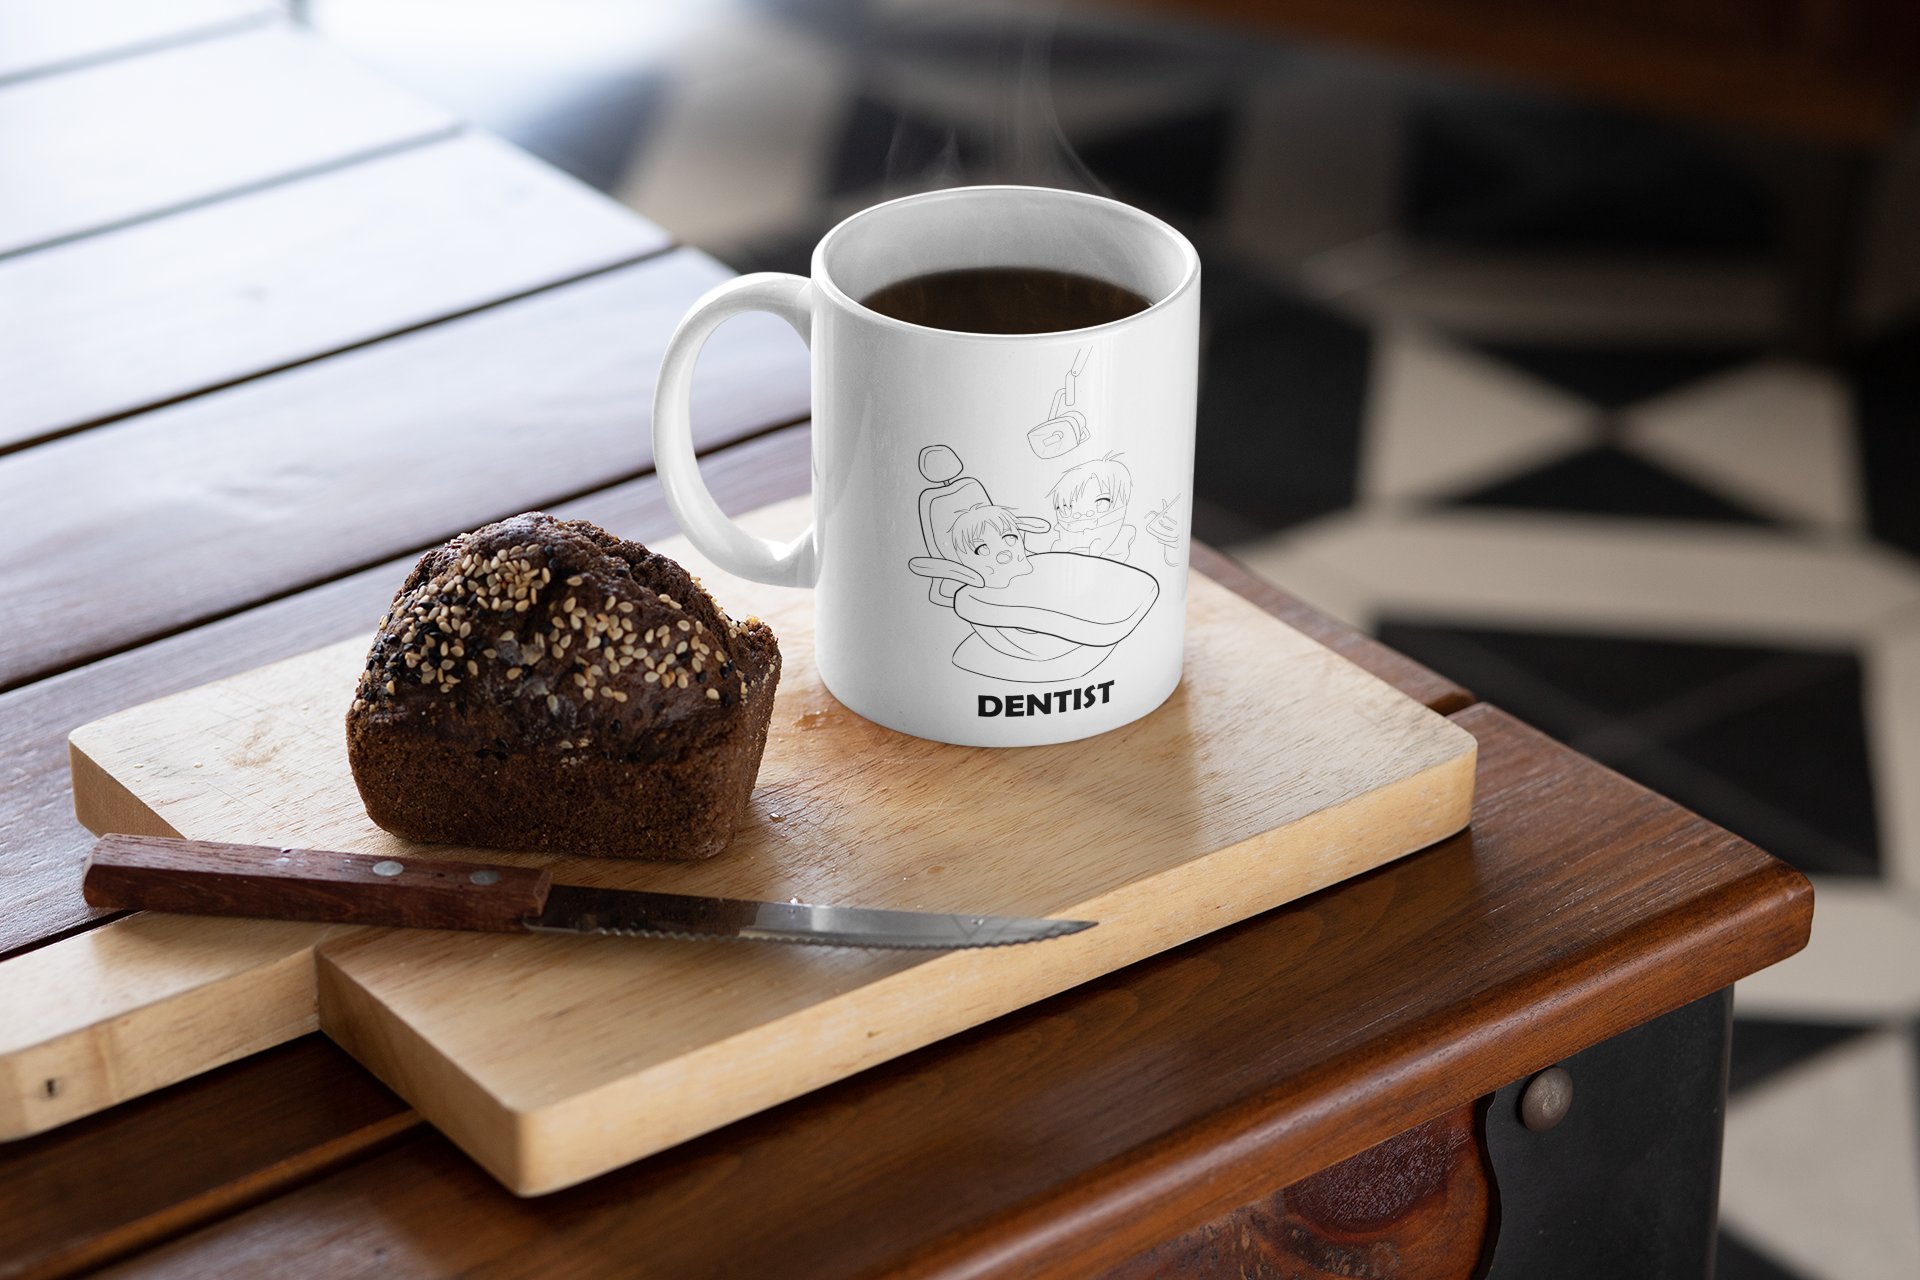 Dentist| 11oz or 15oz | Funny Occupational Coffee Mug, Humorous Quote Coffee Mug, Tea Mug